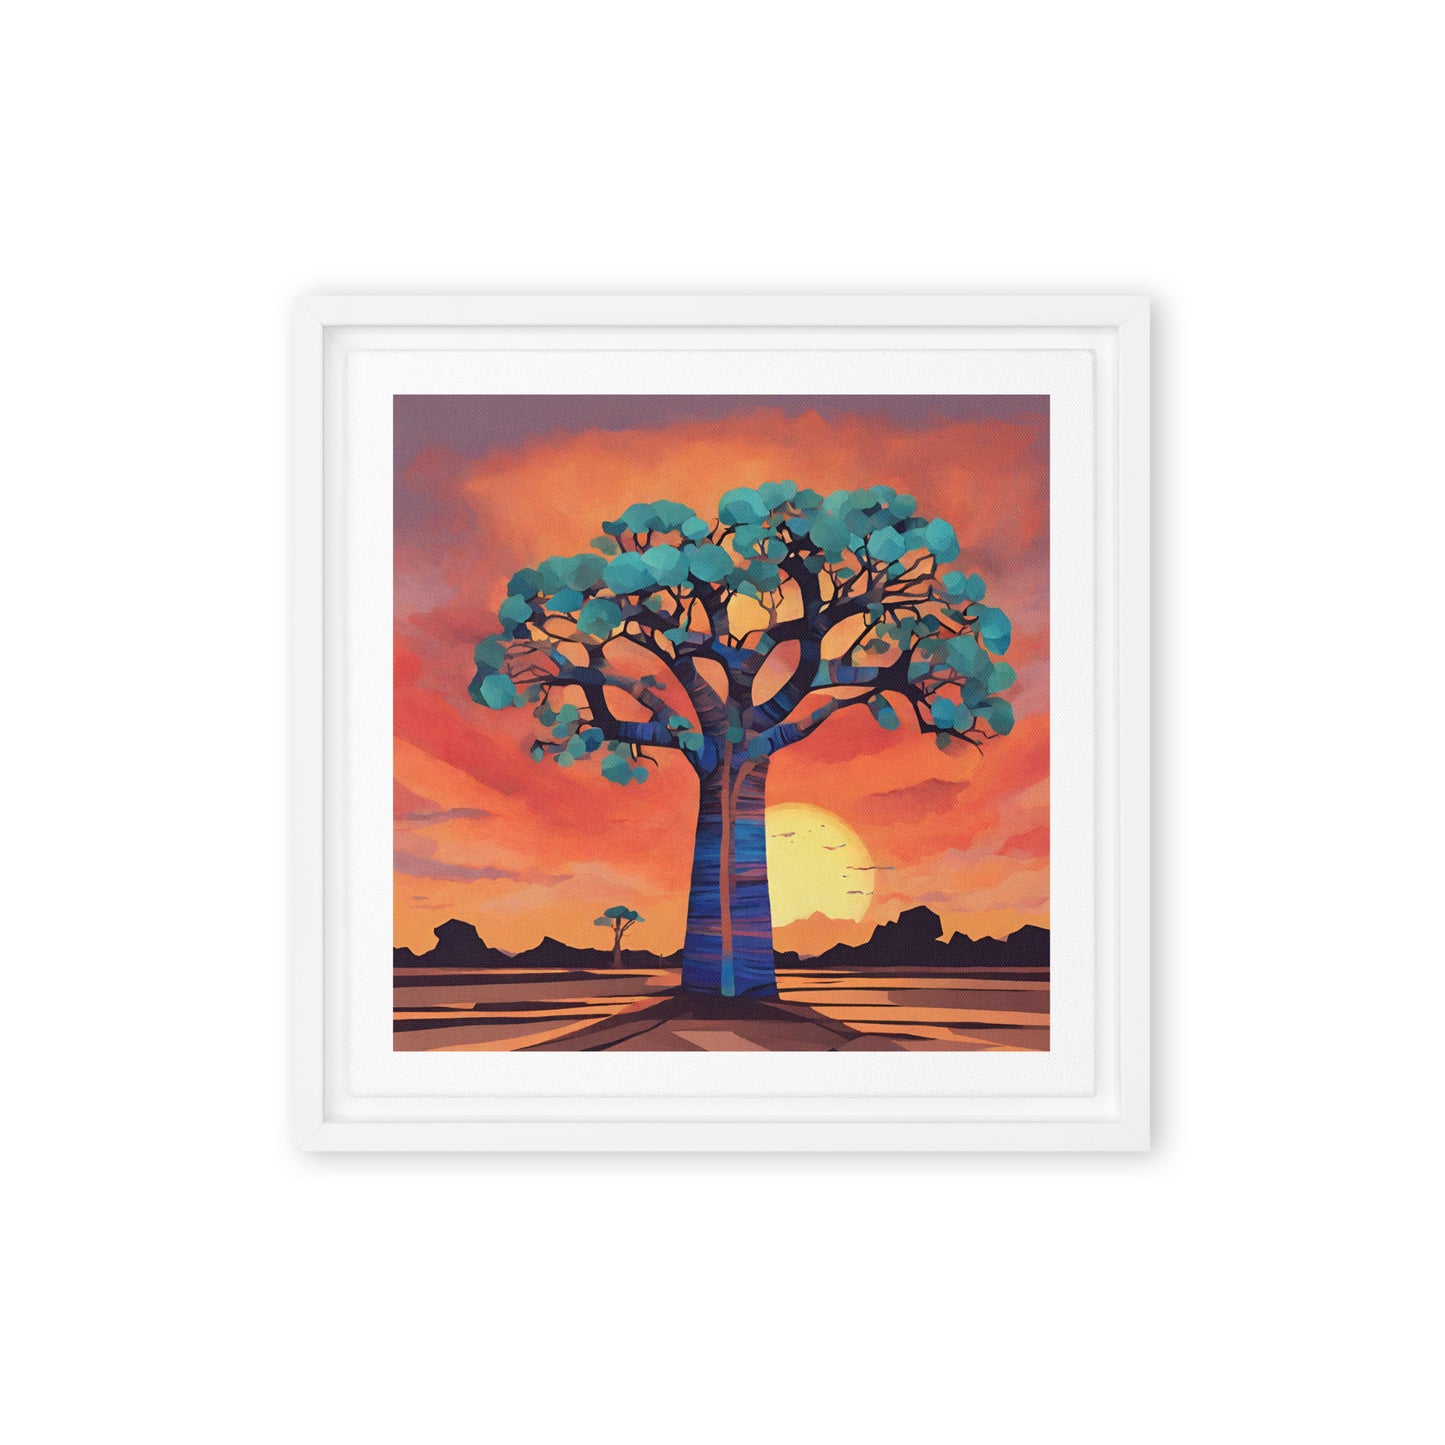 Madagascar tree of life - Framed canvas